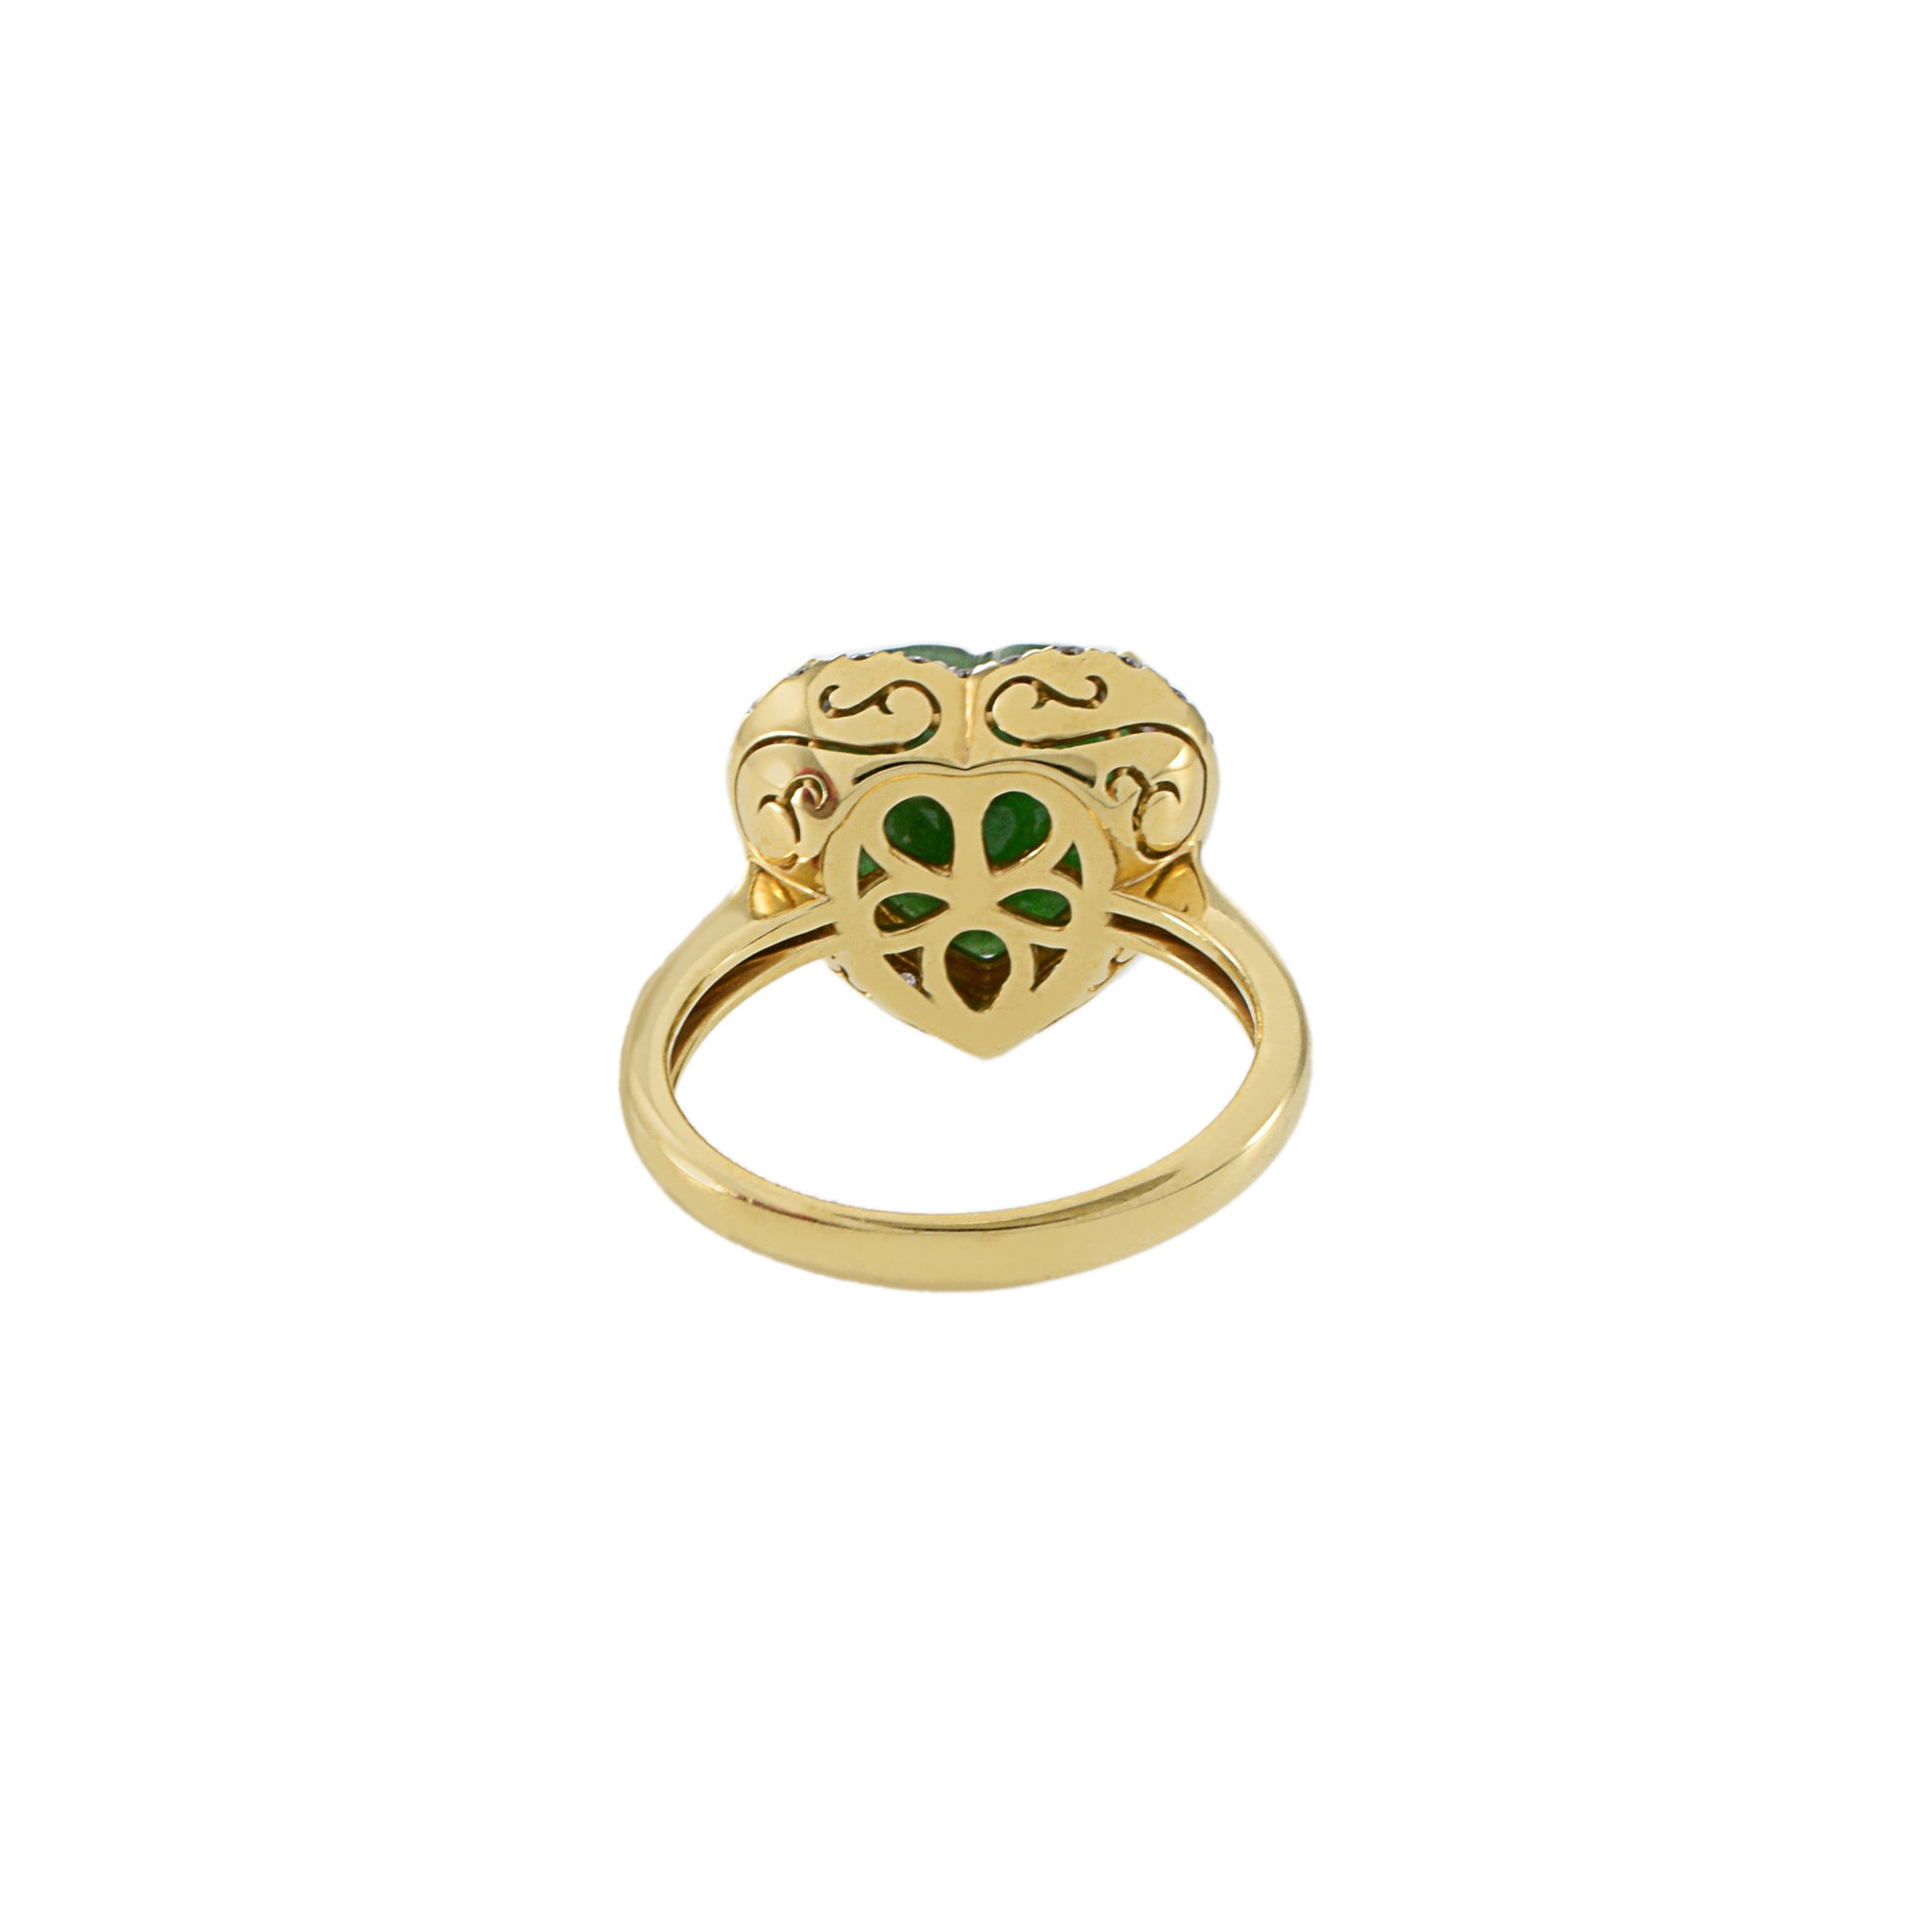 18KT Yellow Gold Jade And Diamond Heart Ring